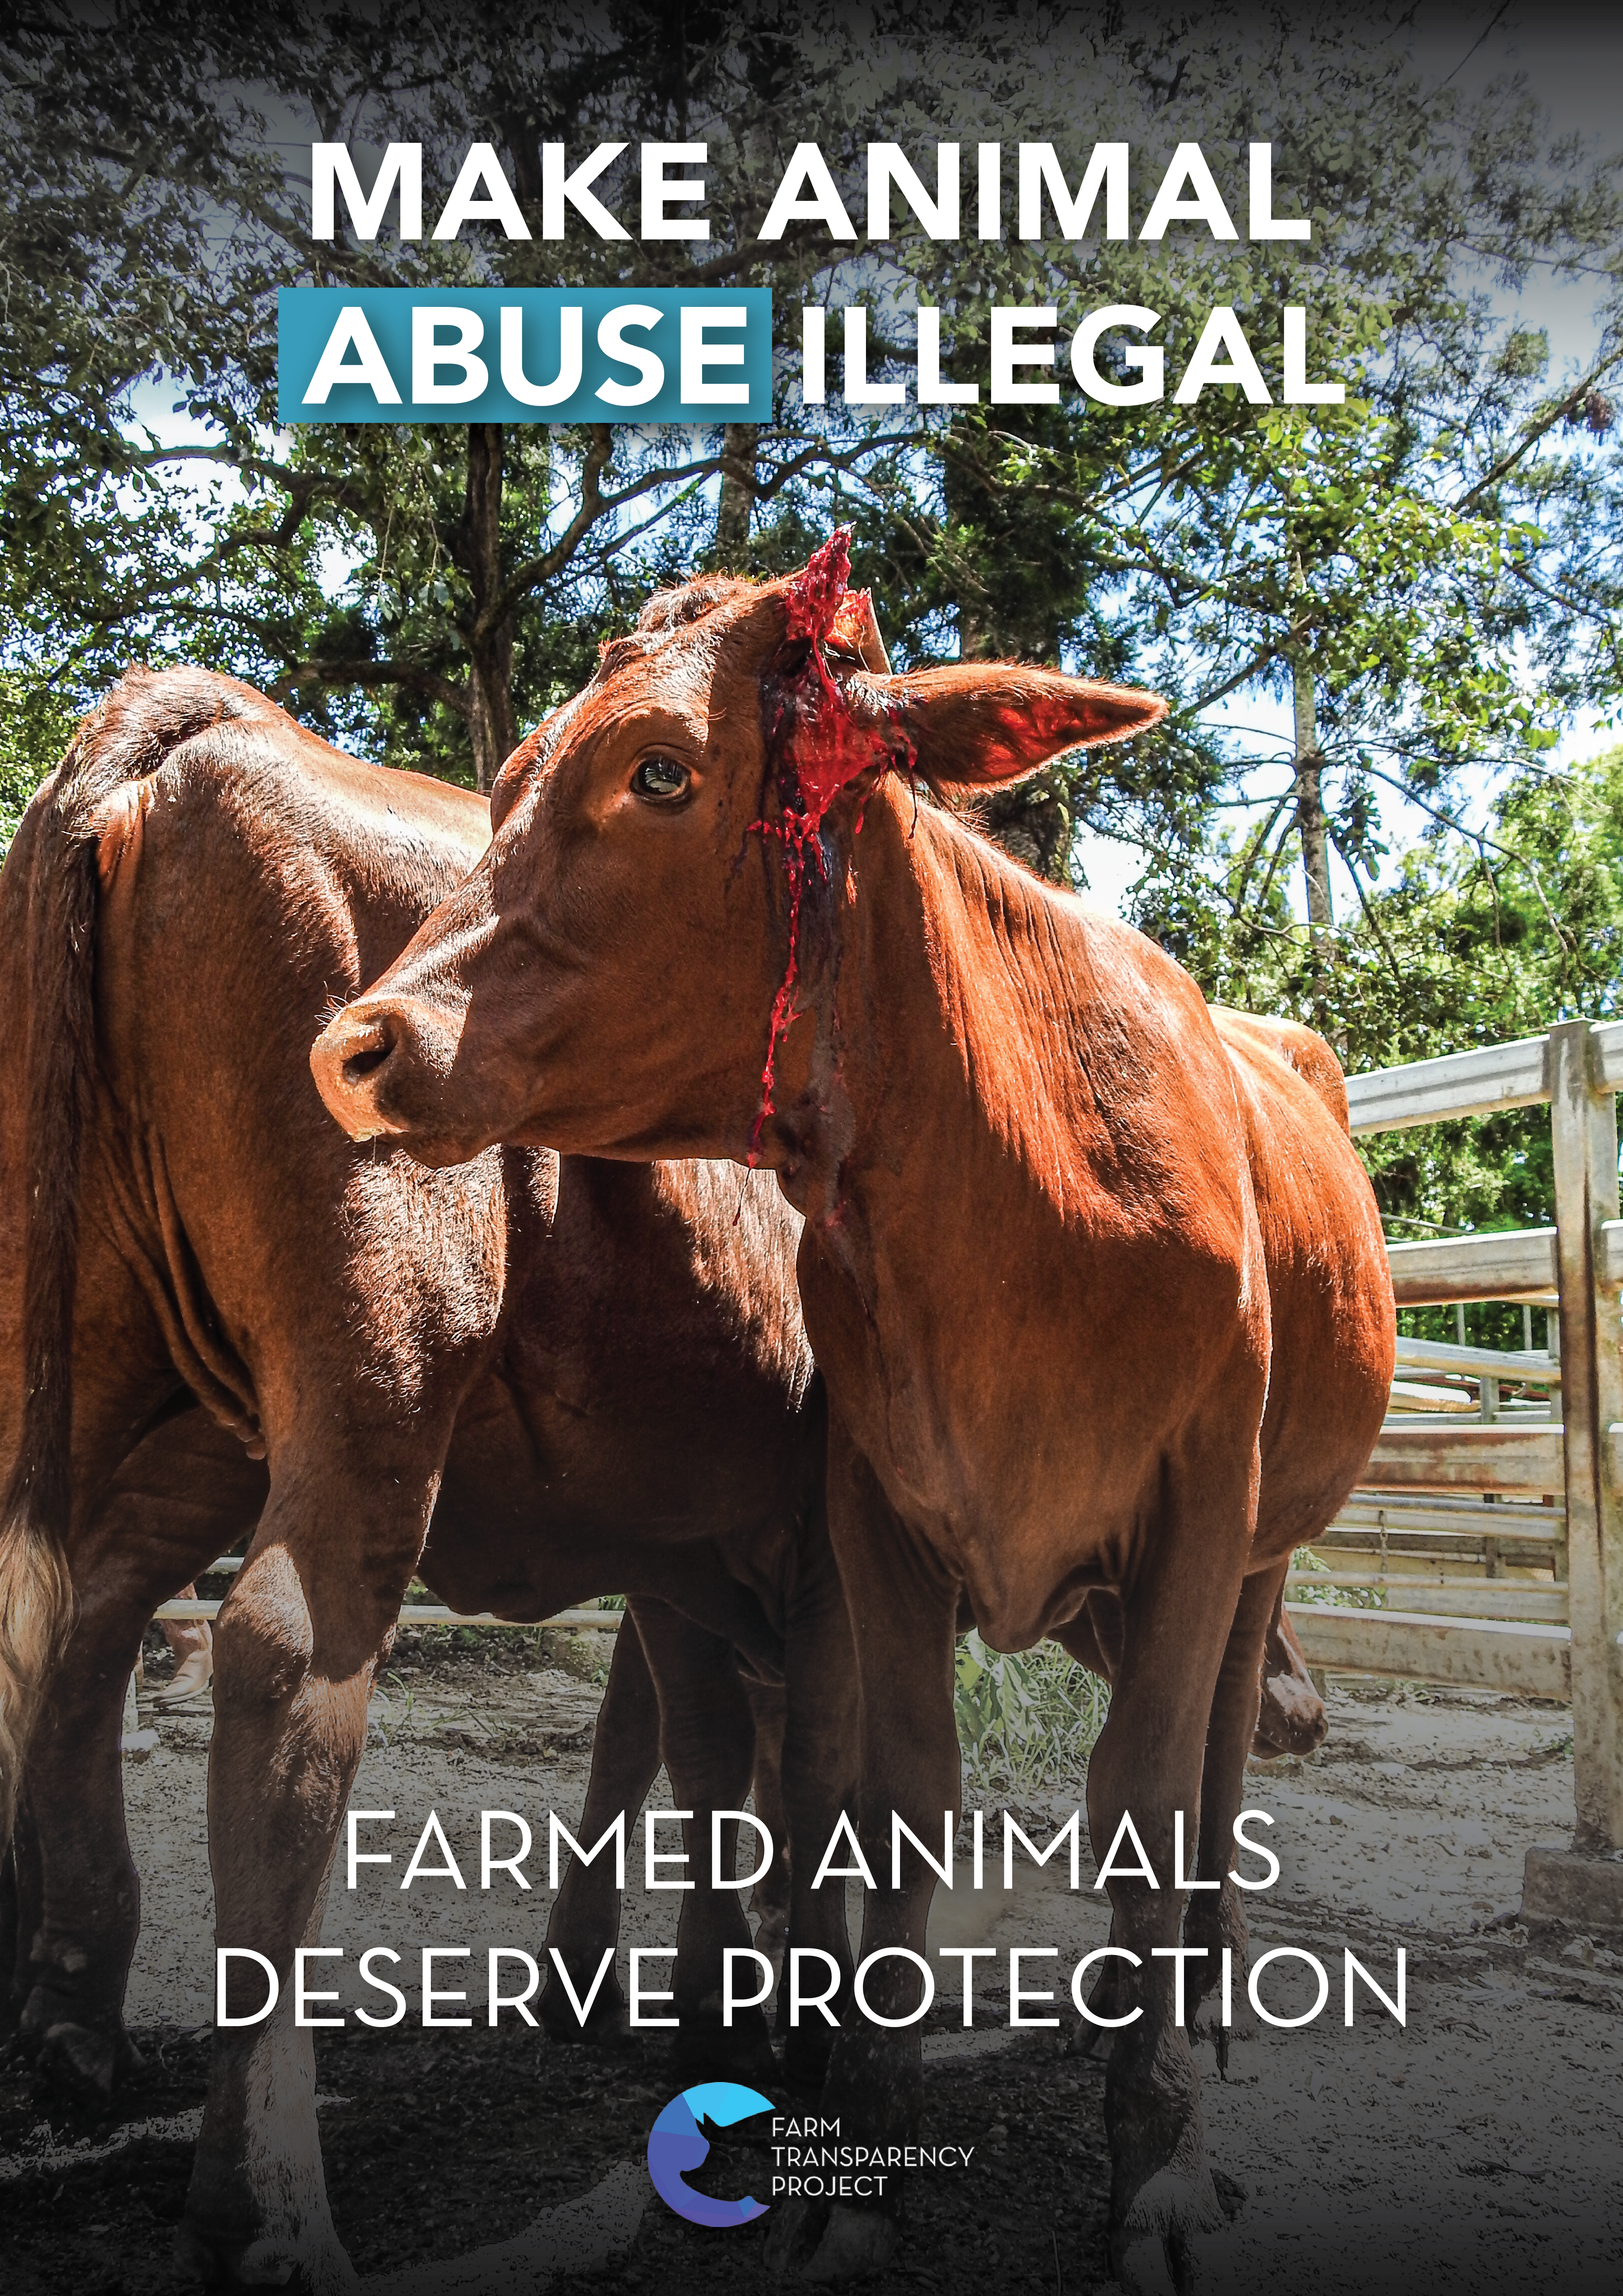 Make Animal Abuse Illegal (Cow) Poster Design